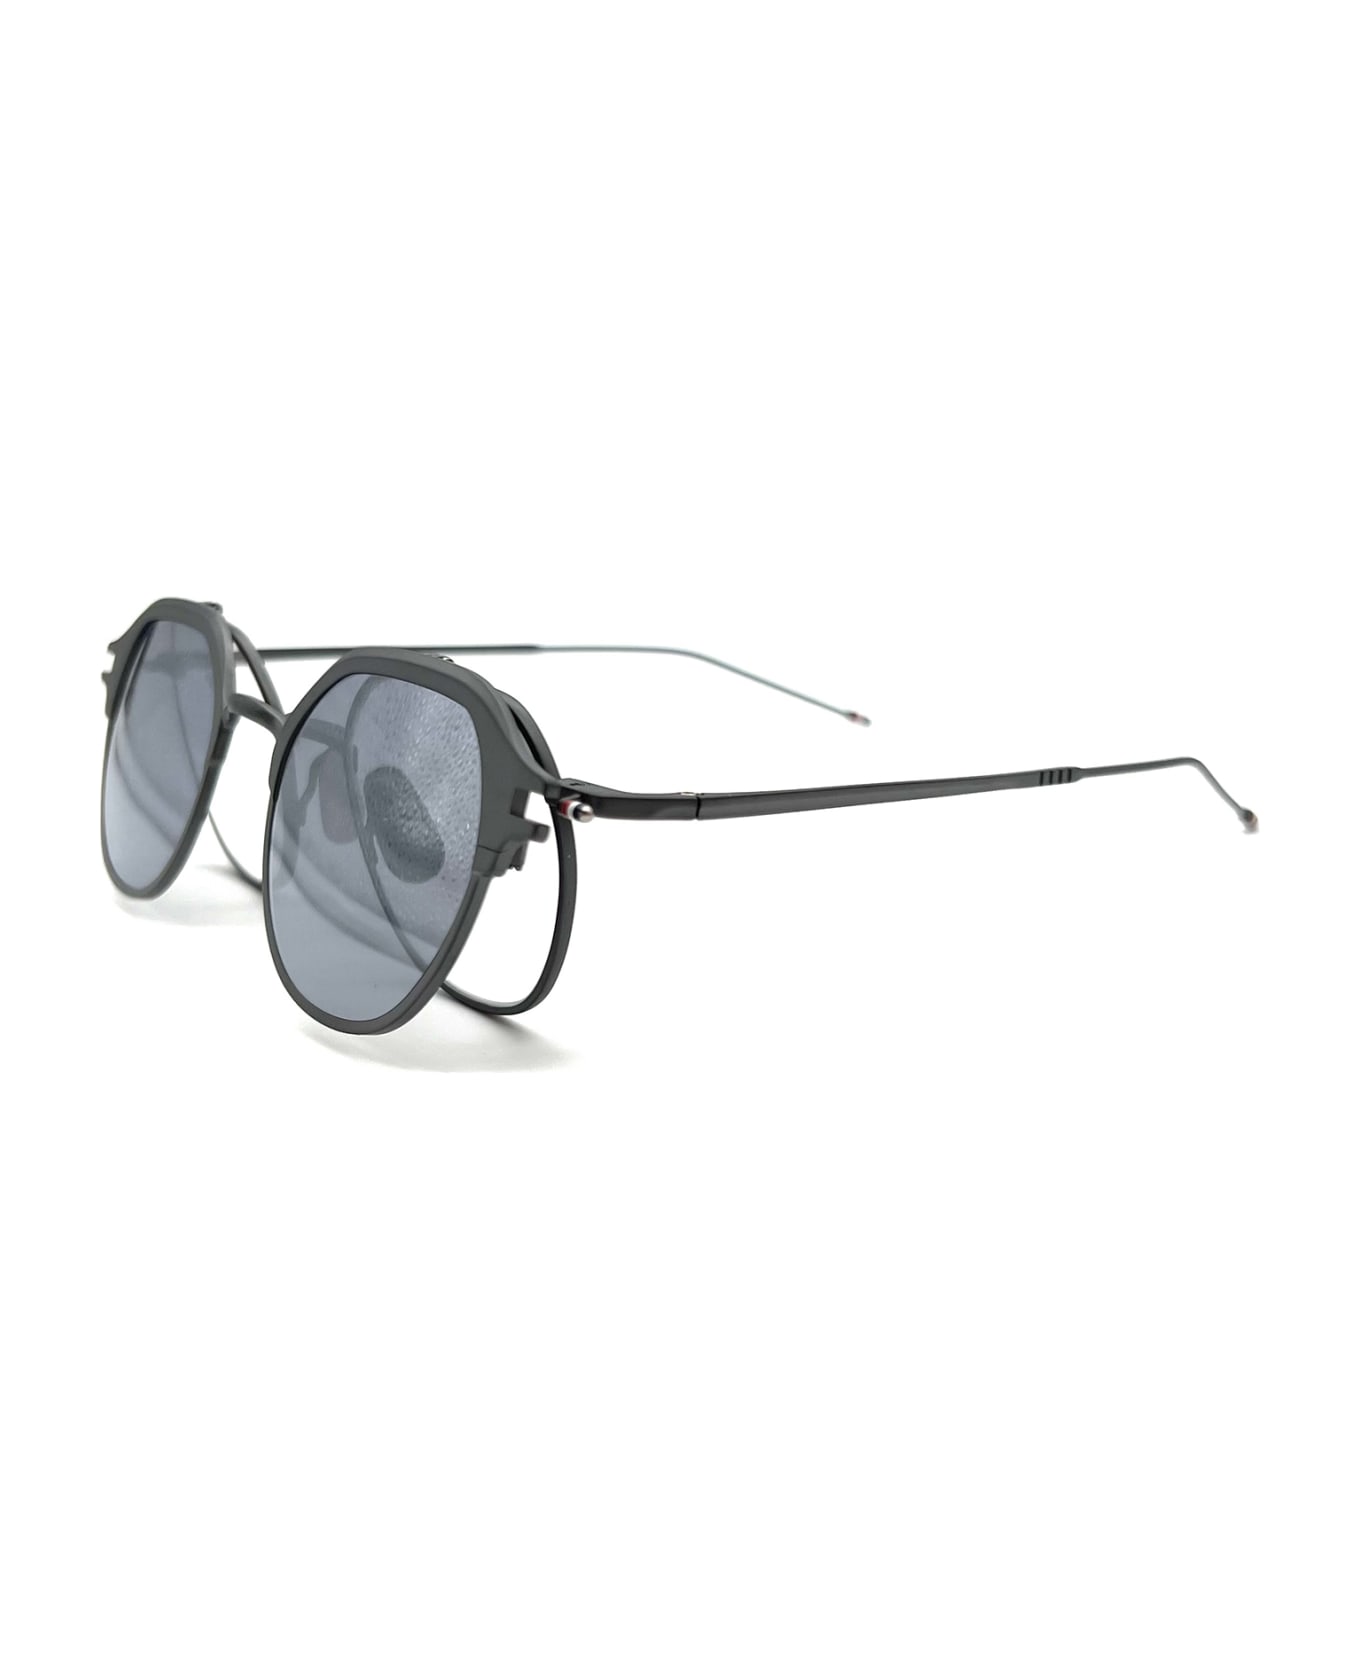 Thom Browne Ues812a/g0001 Sunglasses - Black/charcoal